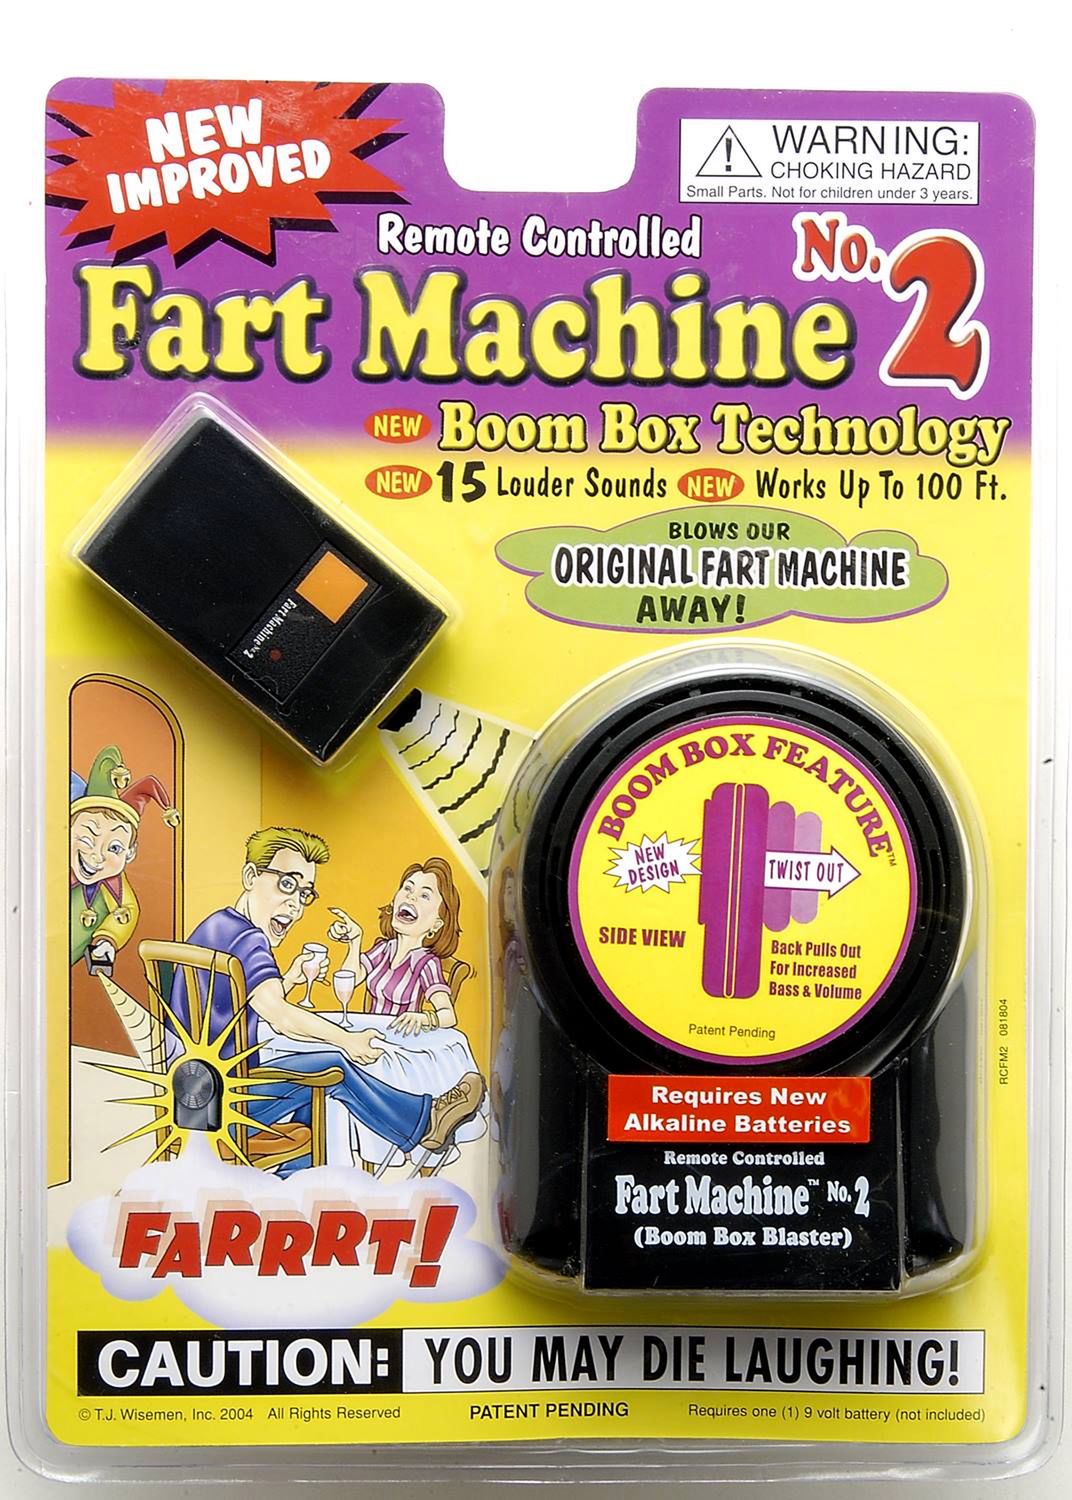 Remote-controlled fart machine